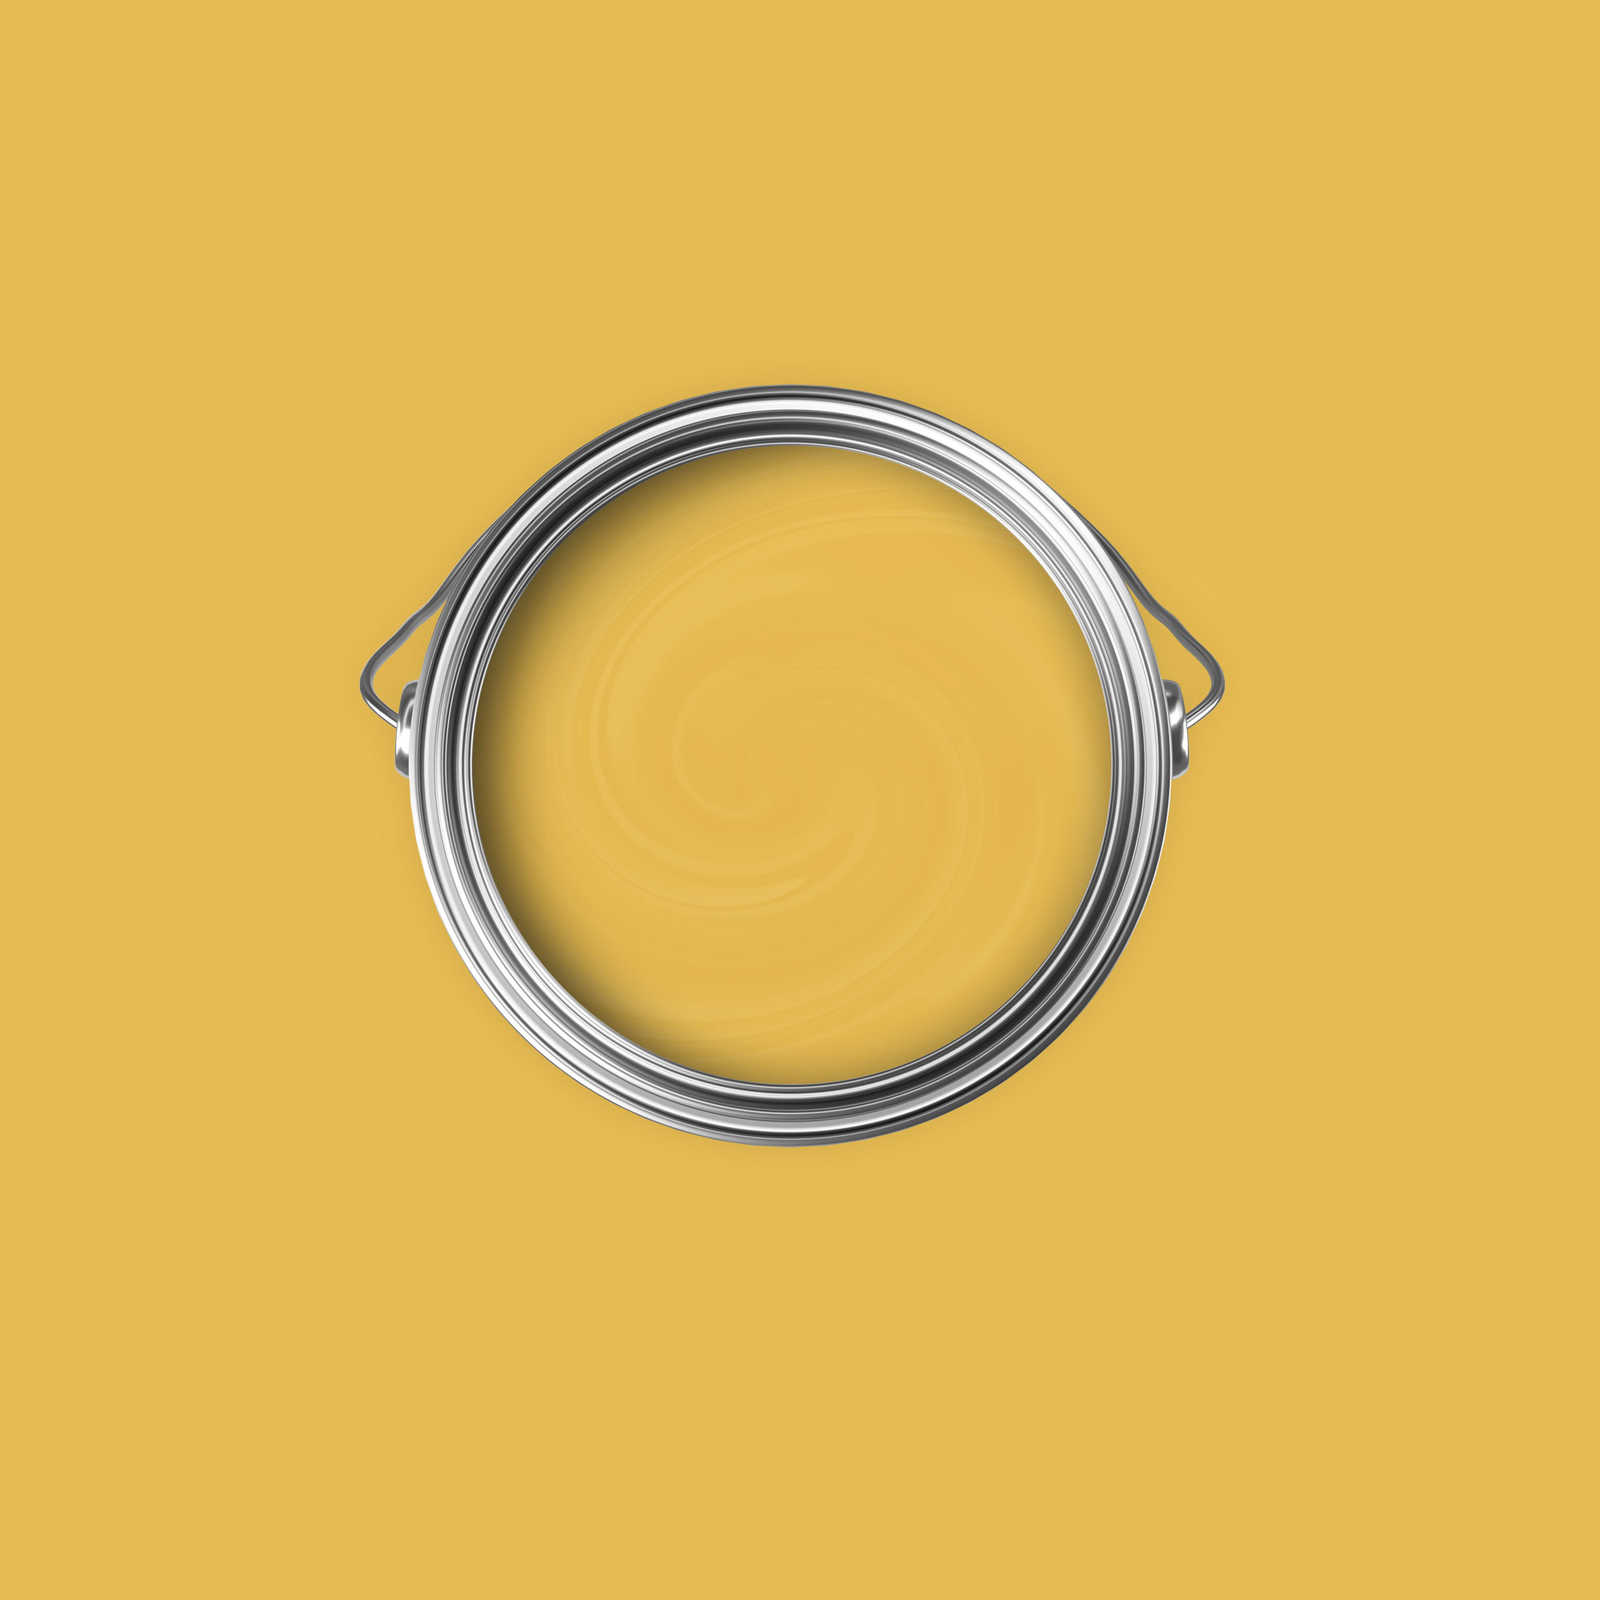             Premium Wandfarbe aktive Vanille »Juicy Yellow« NW803 – 2,5 Liter
        